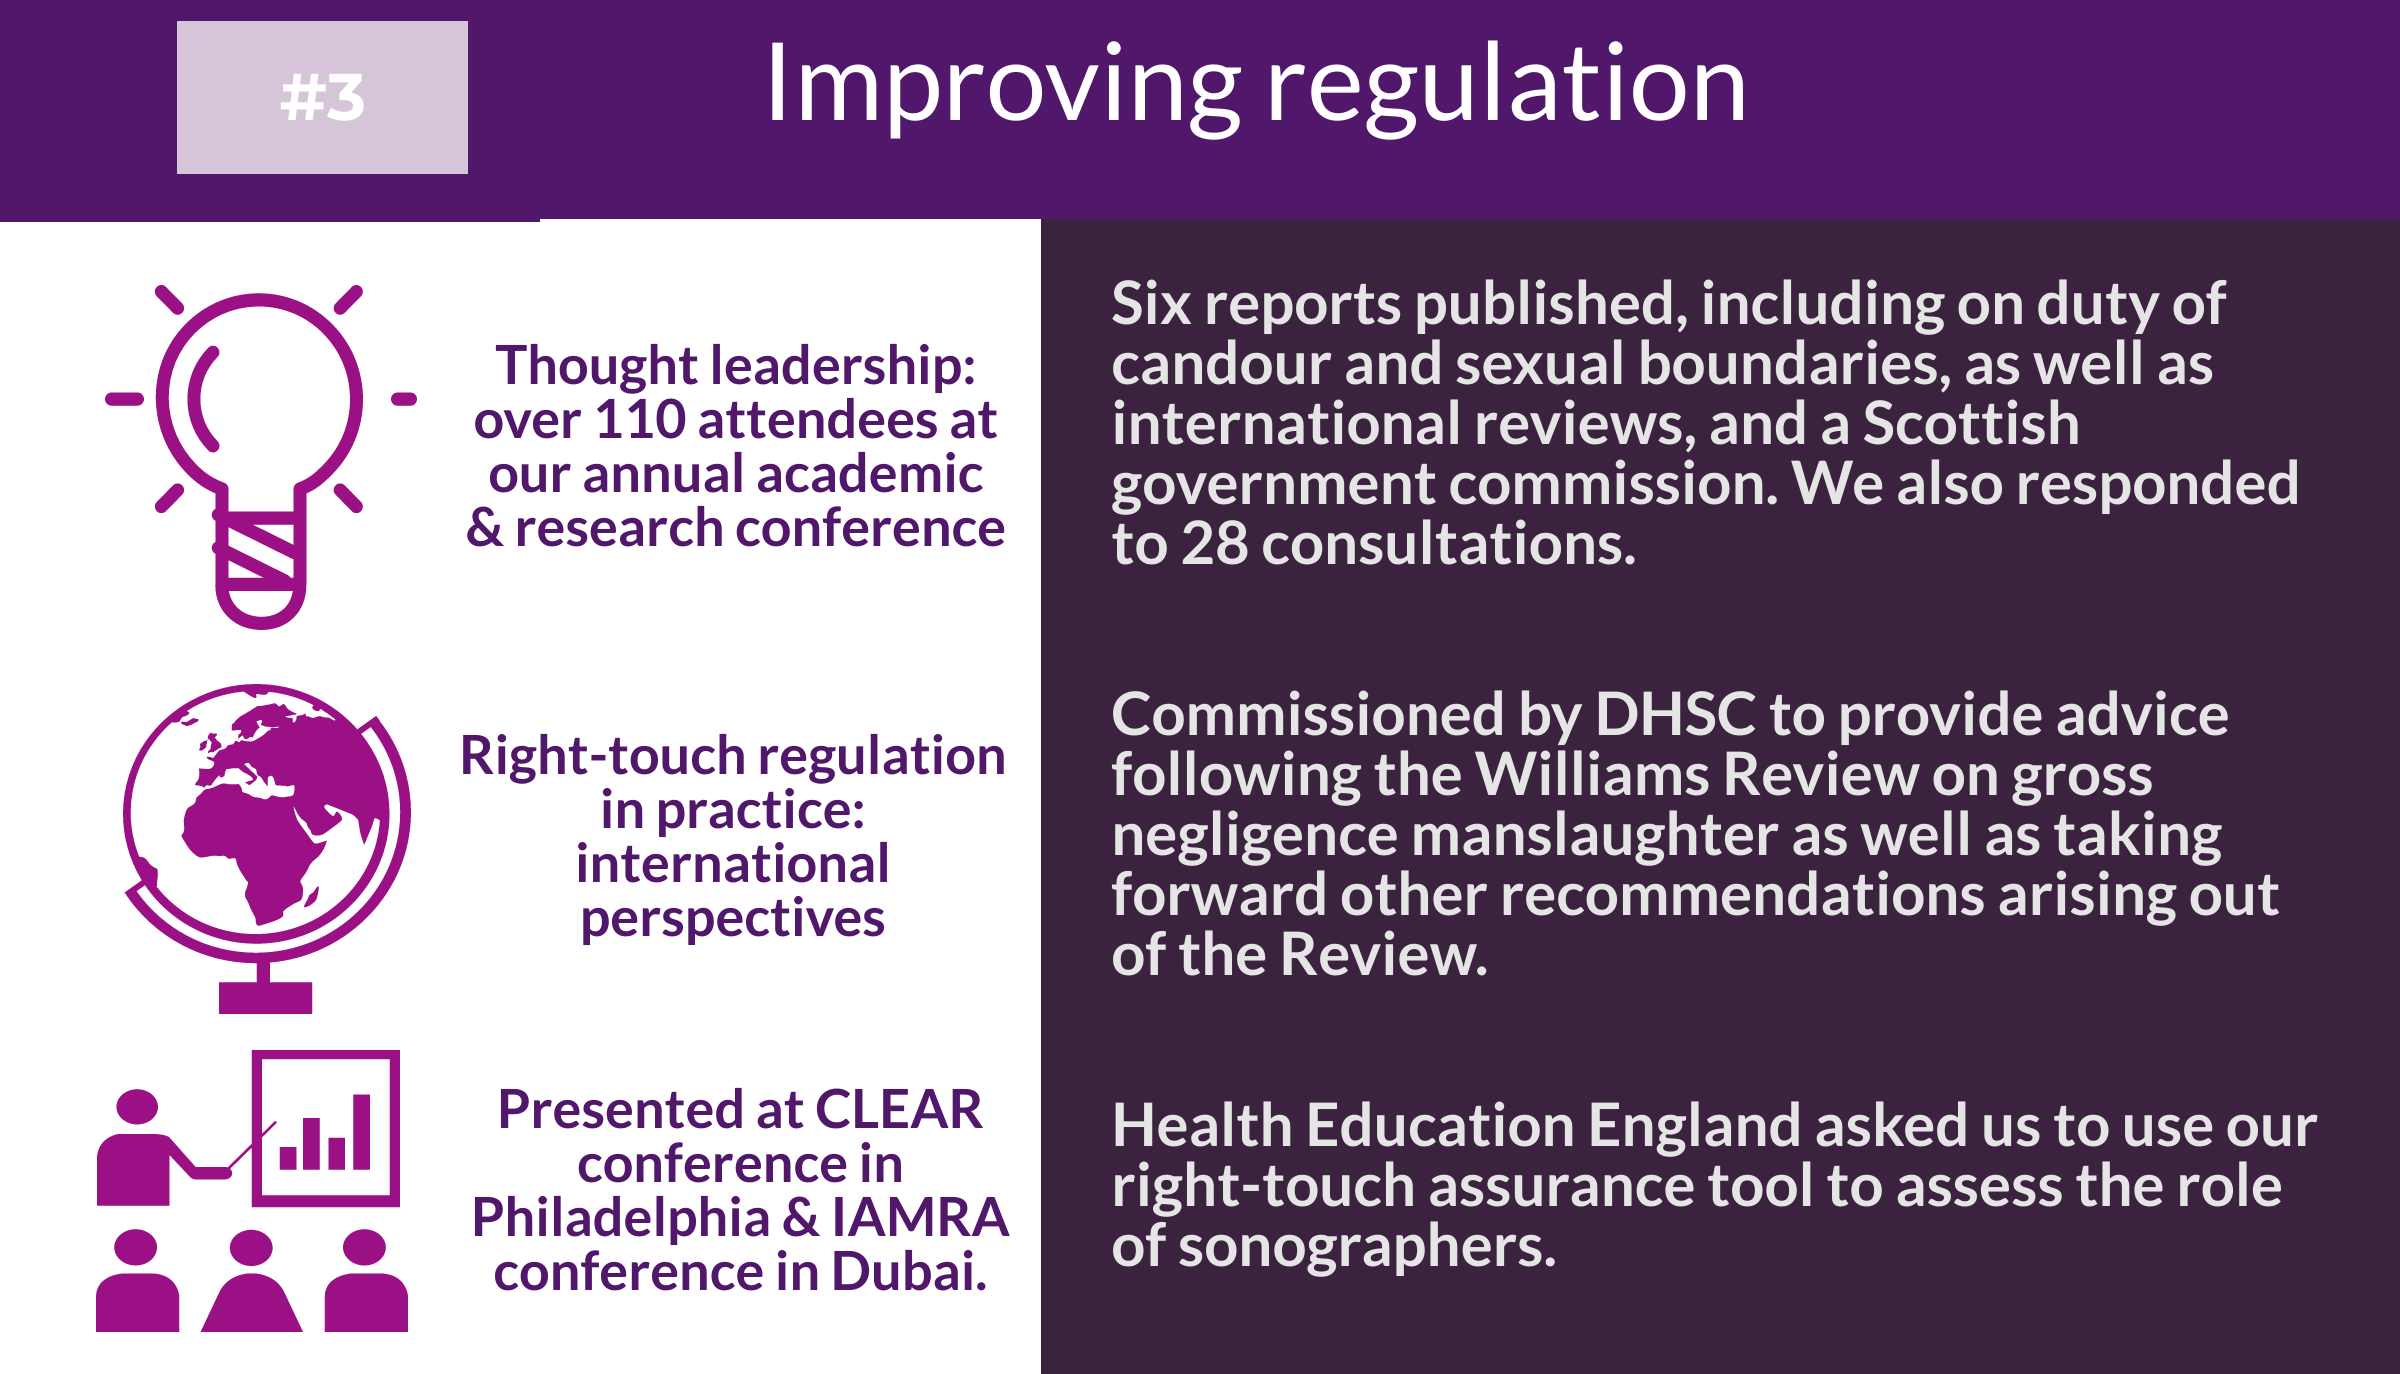 Annual report highlights 2018/19 - improving regulation